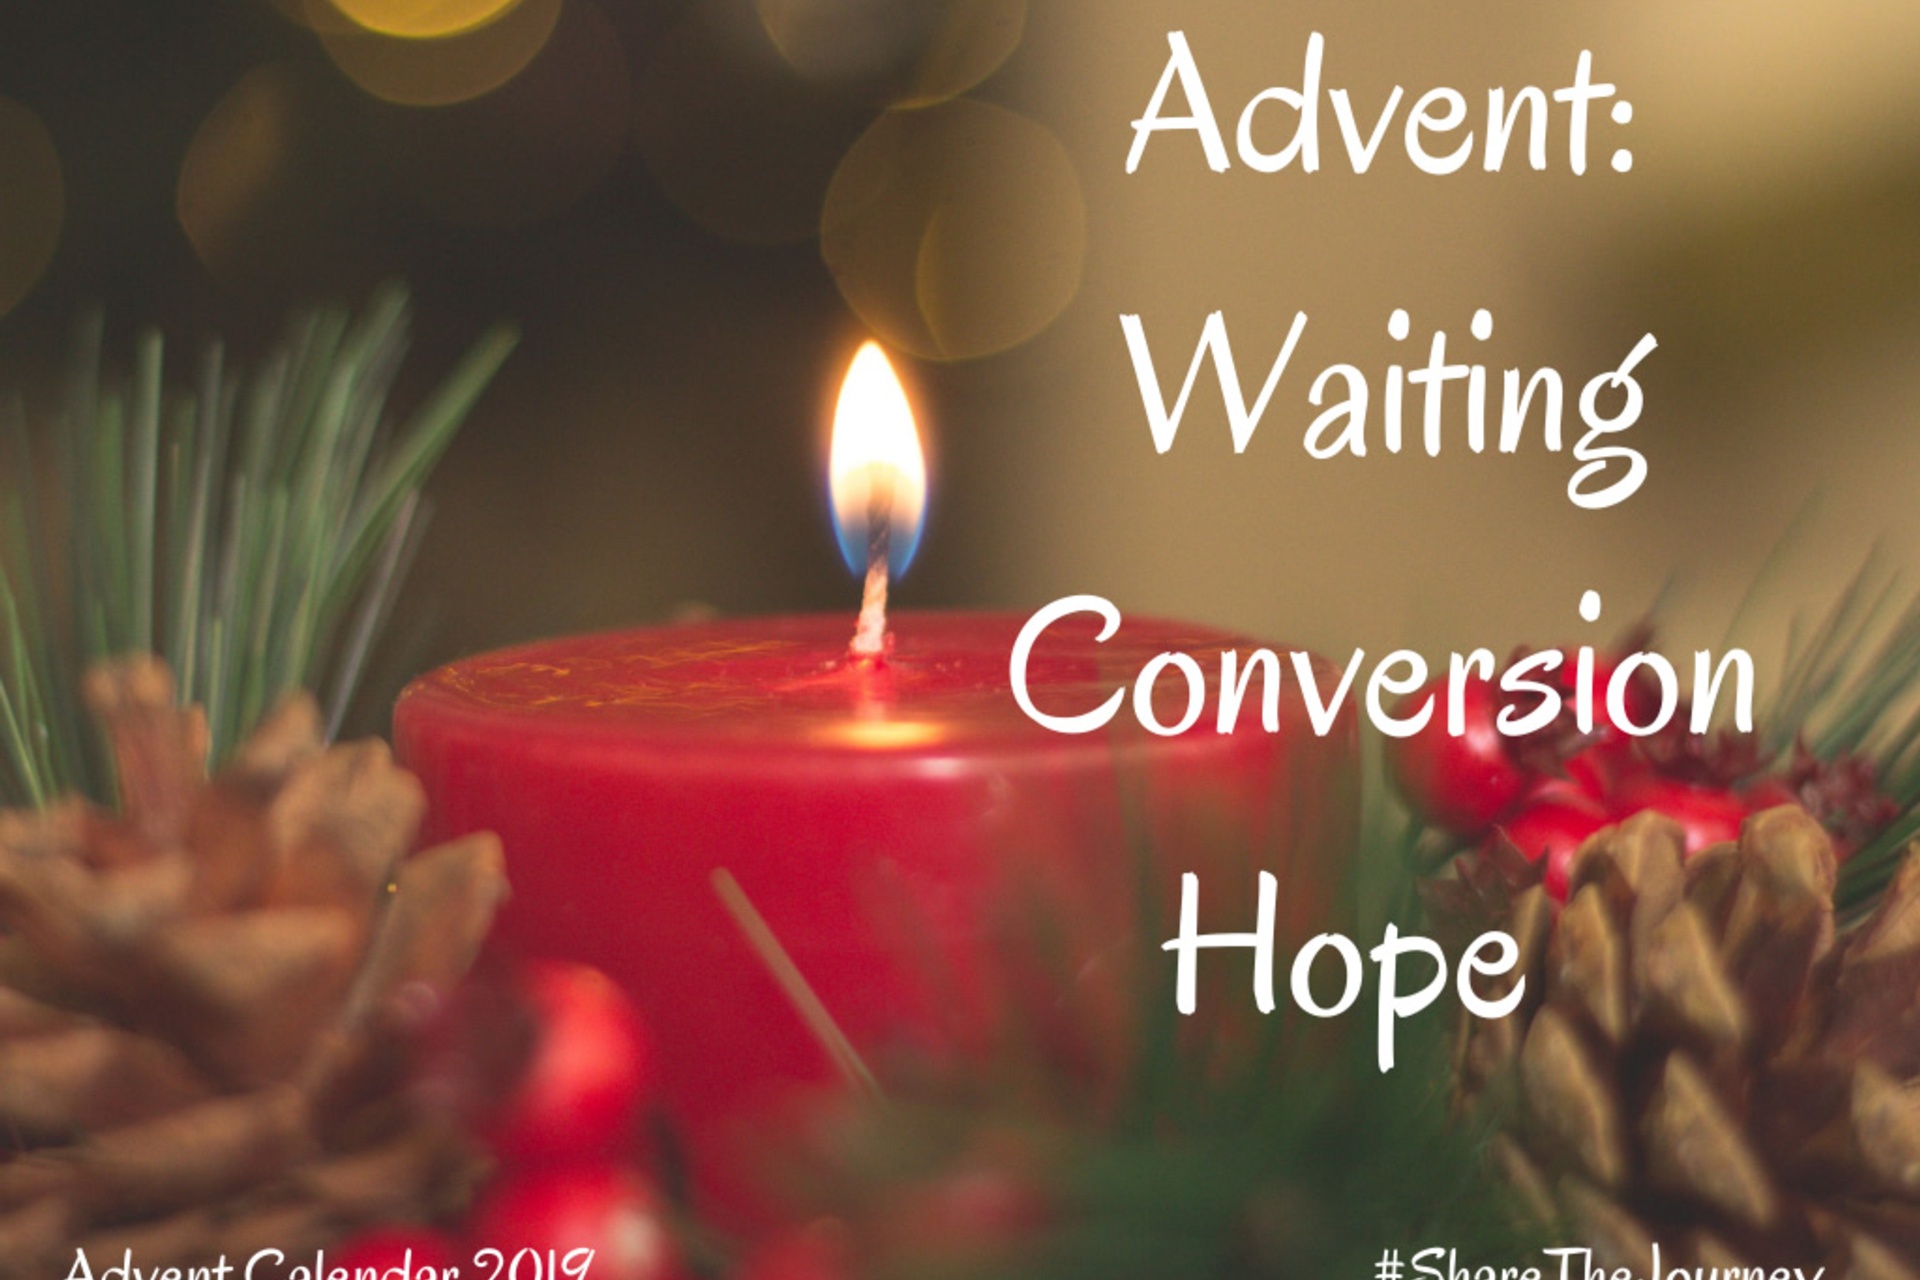 Day 15: Sunday 15 December 2019 – Third Sunday of Advent (Gaudete Sunday)